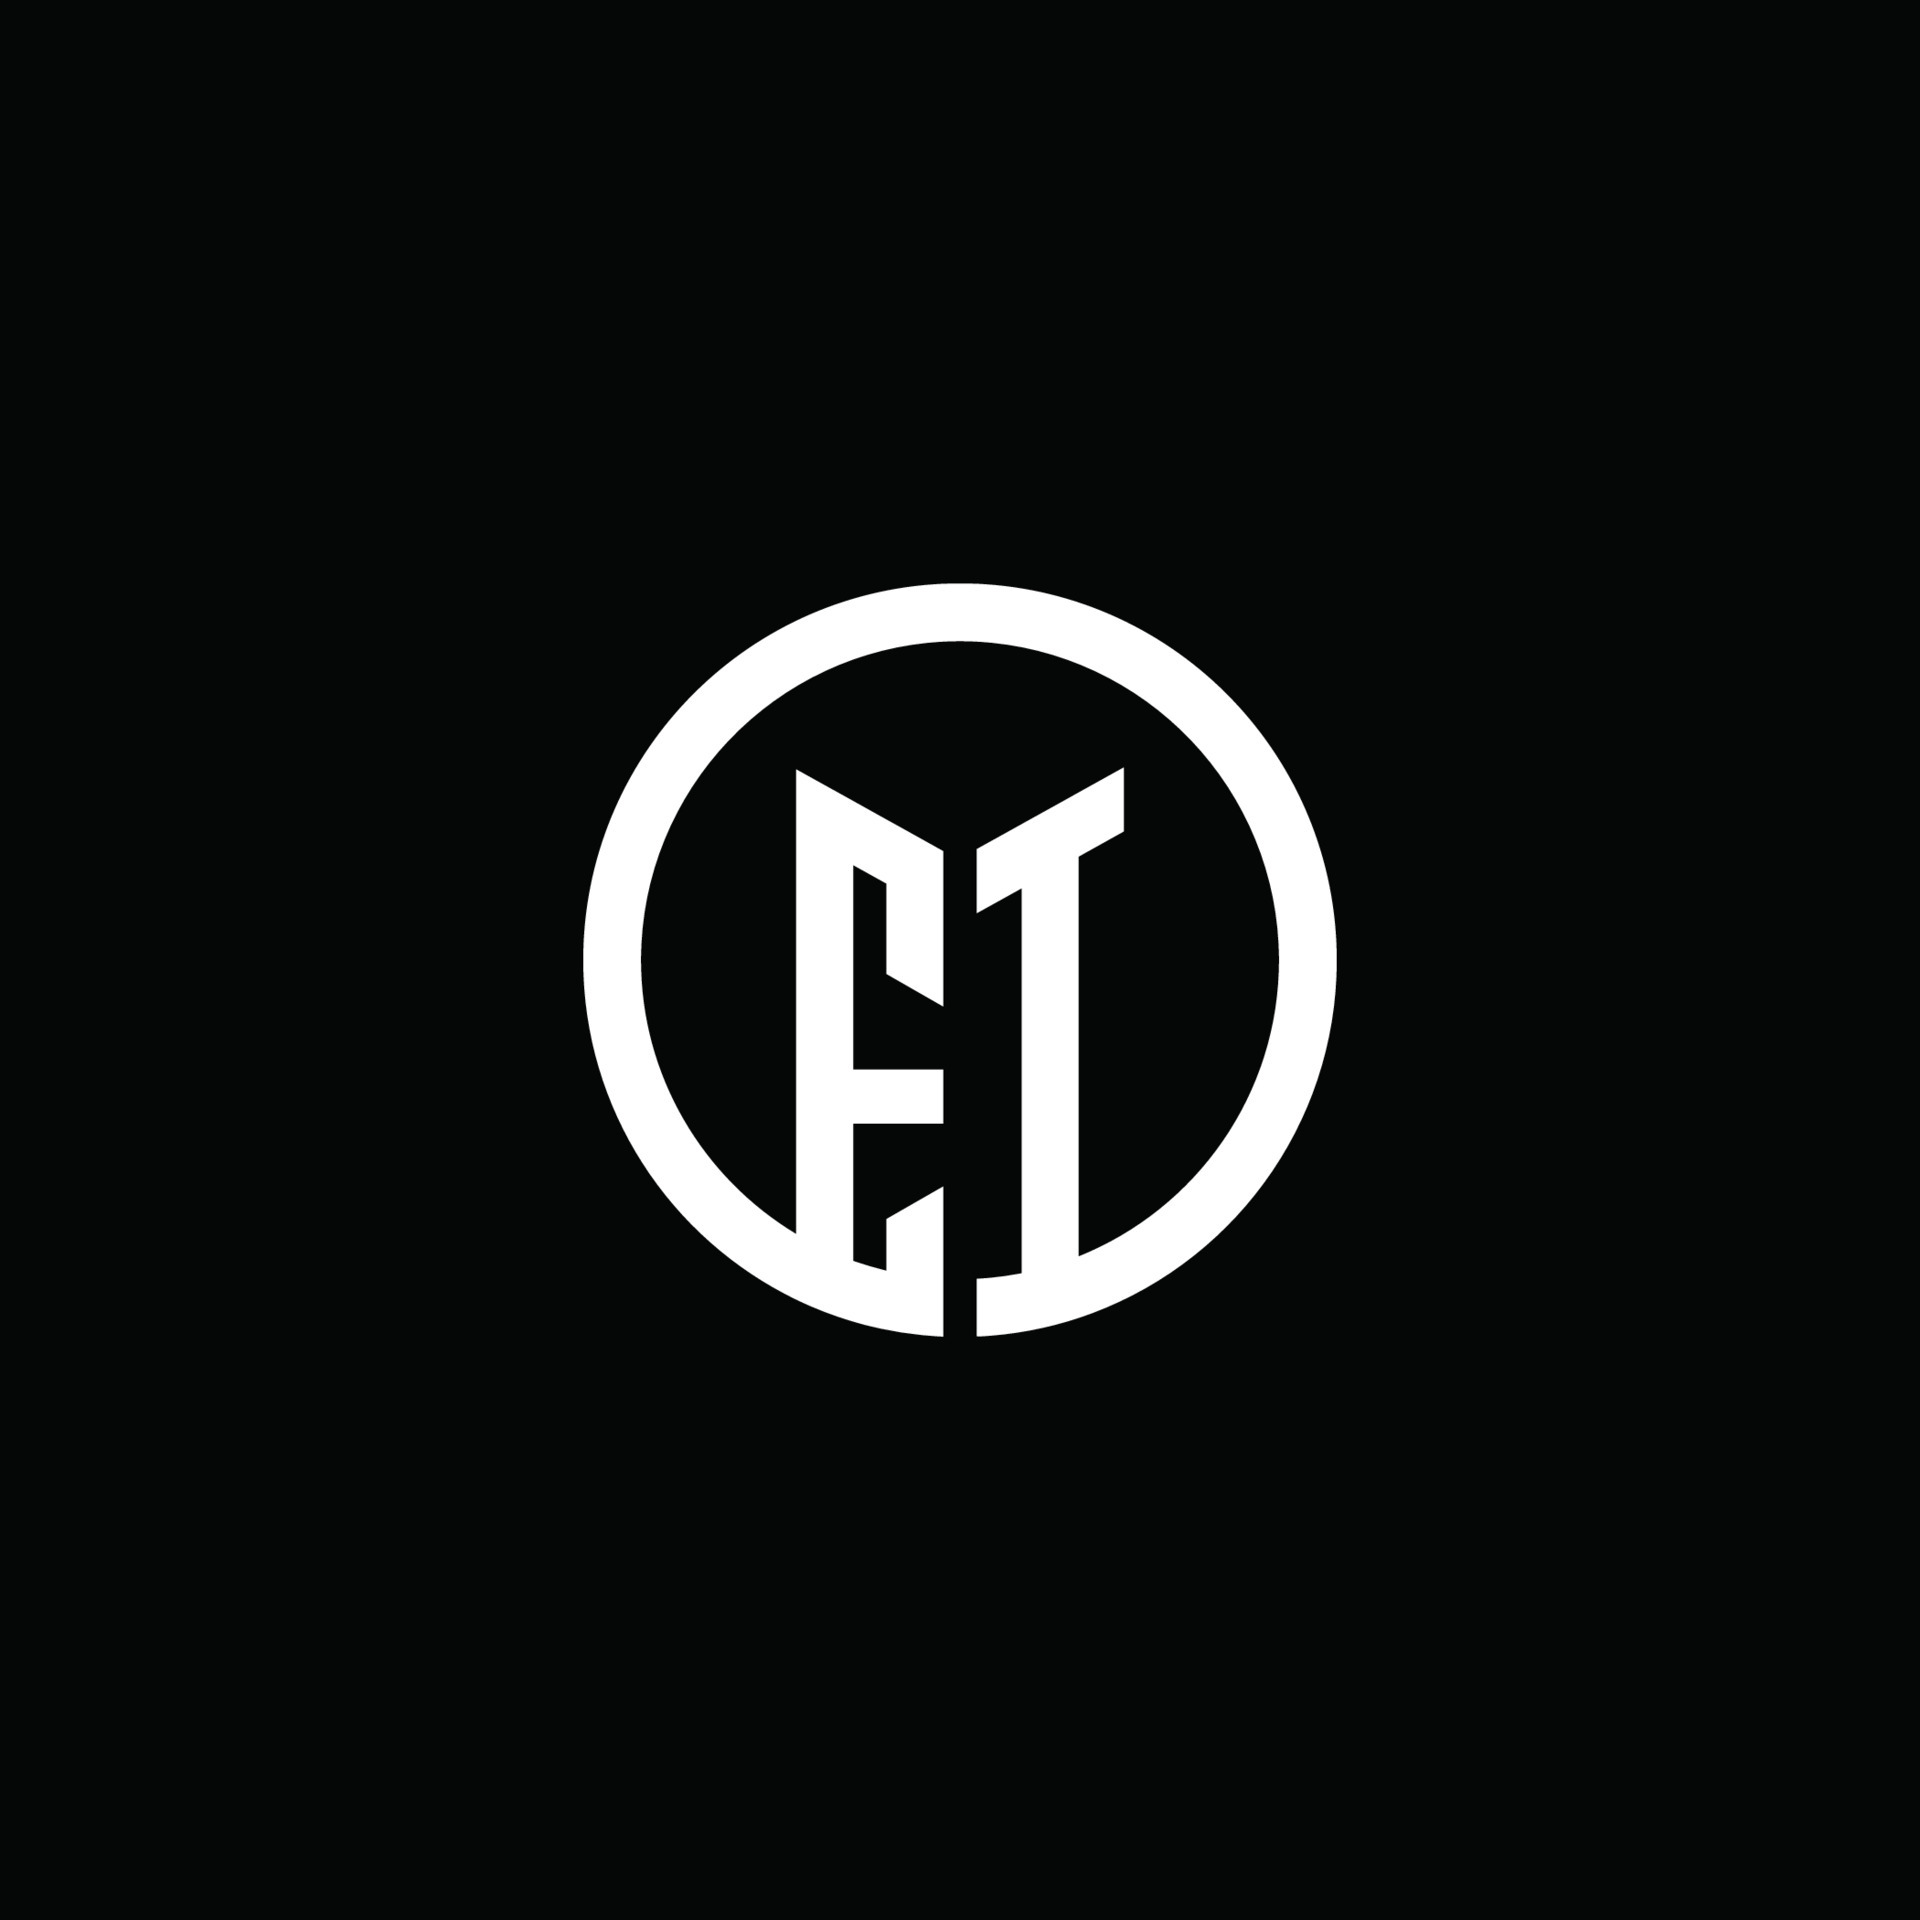 EI monogram logo isolated with a rotating circle 4282645 Vector Art at ...